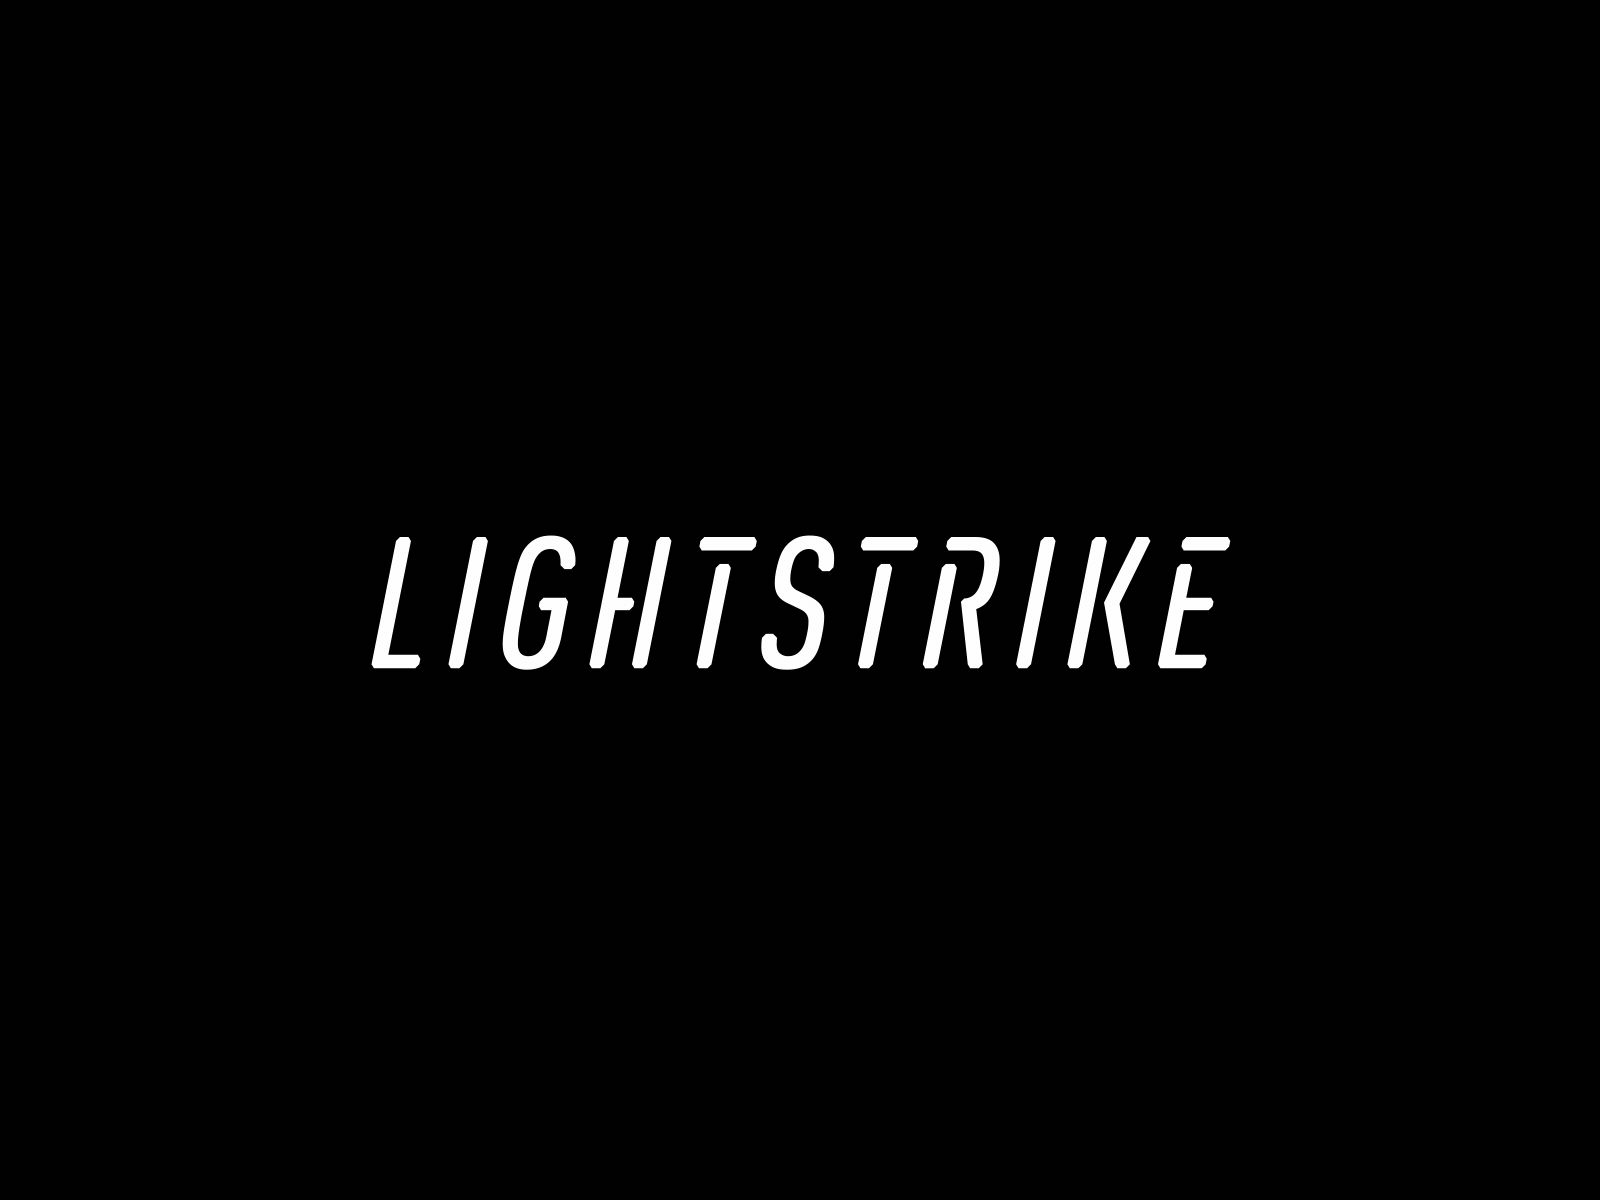 Adidas Lightstrike - logo animation